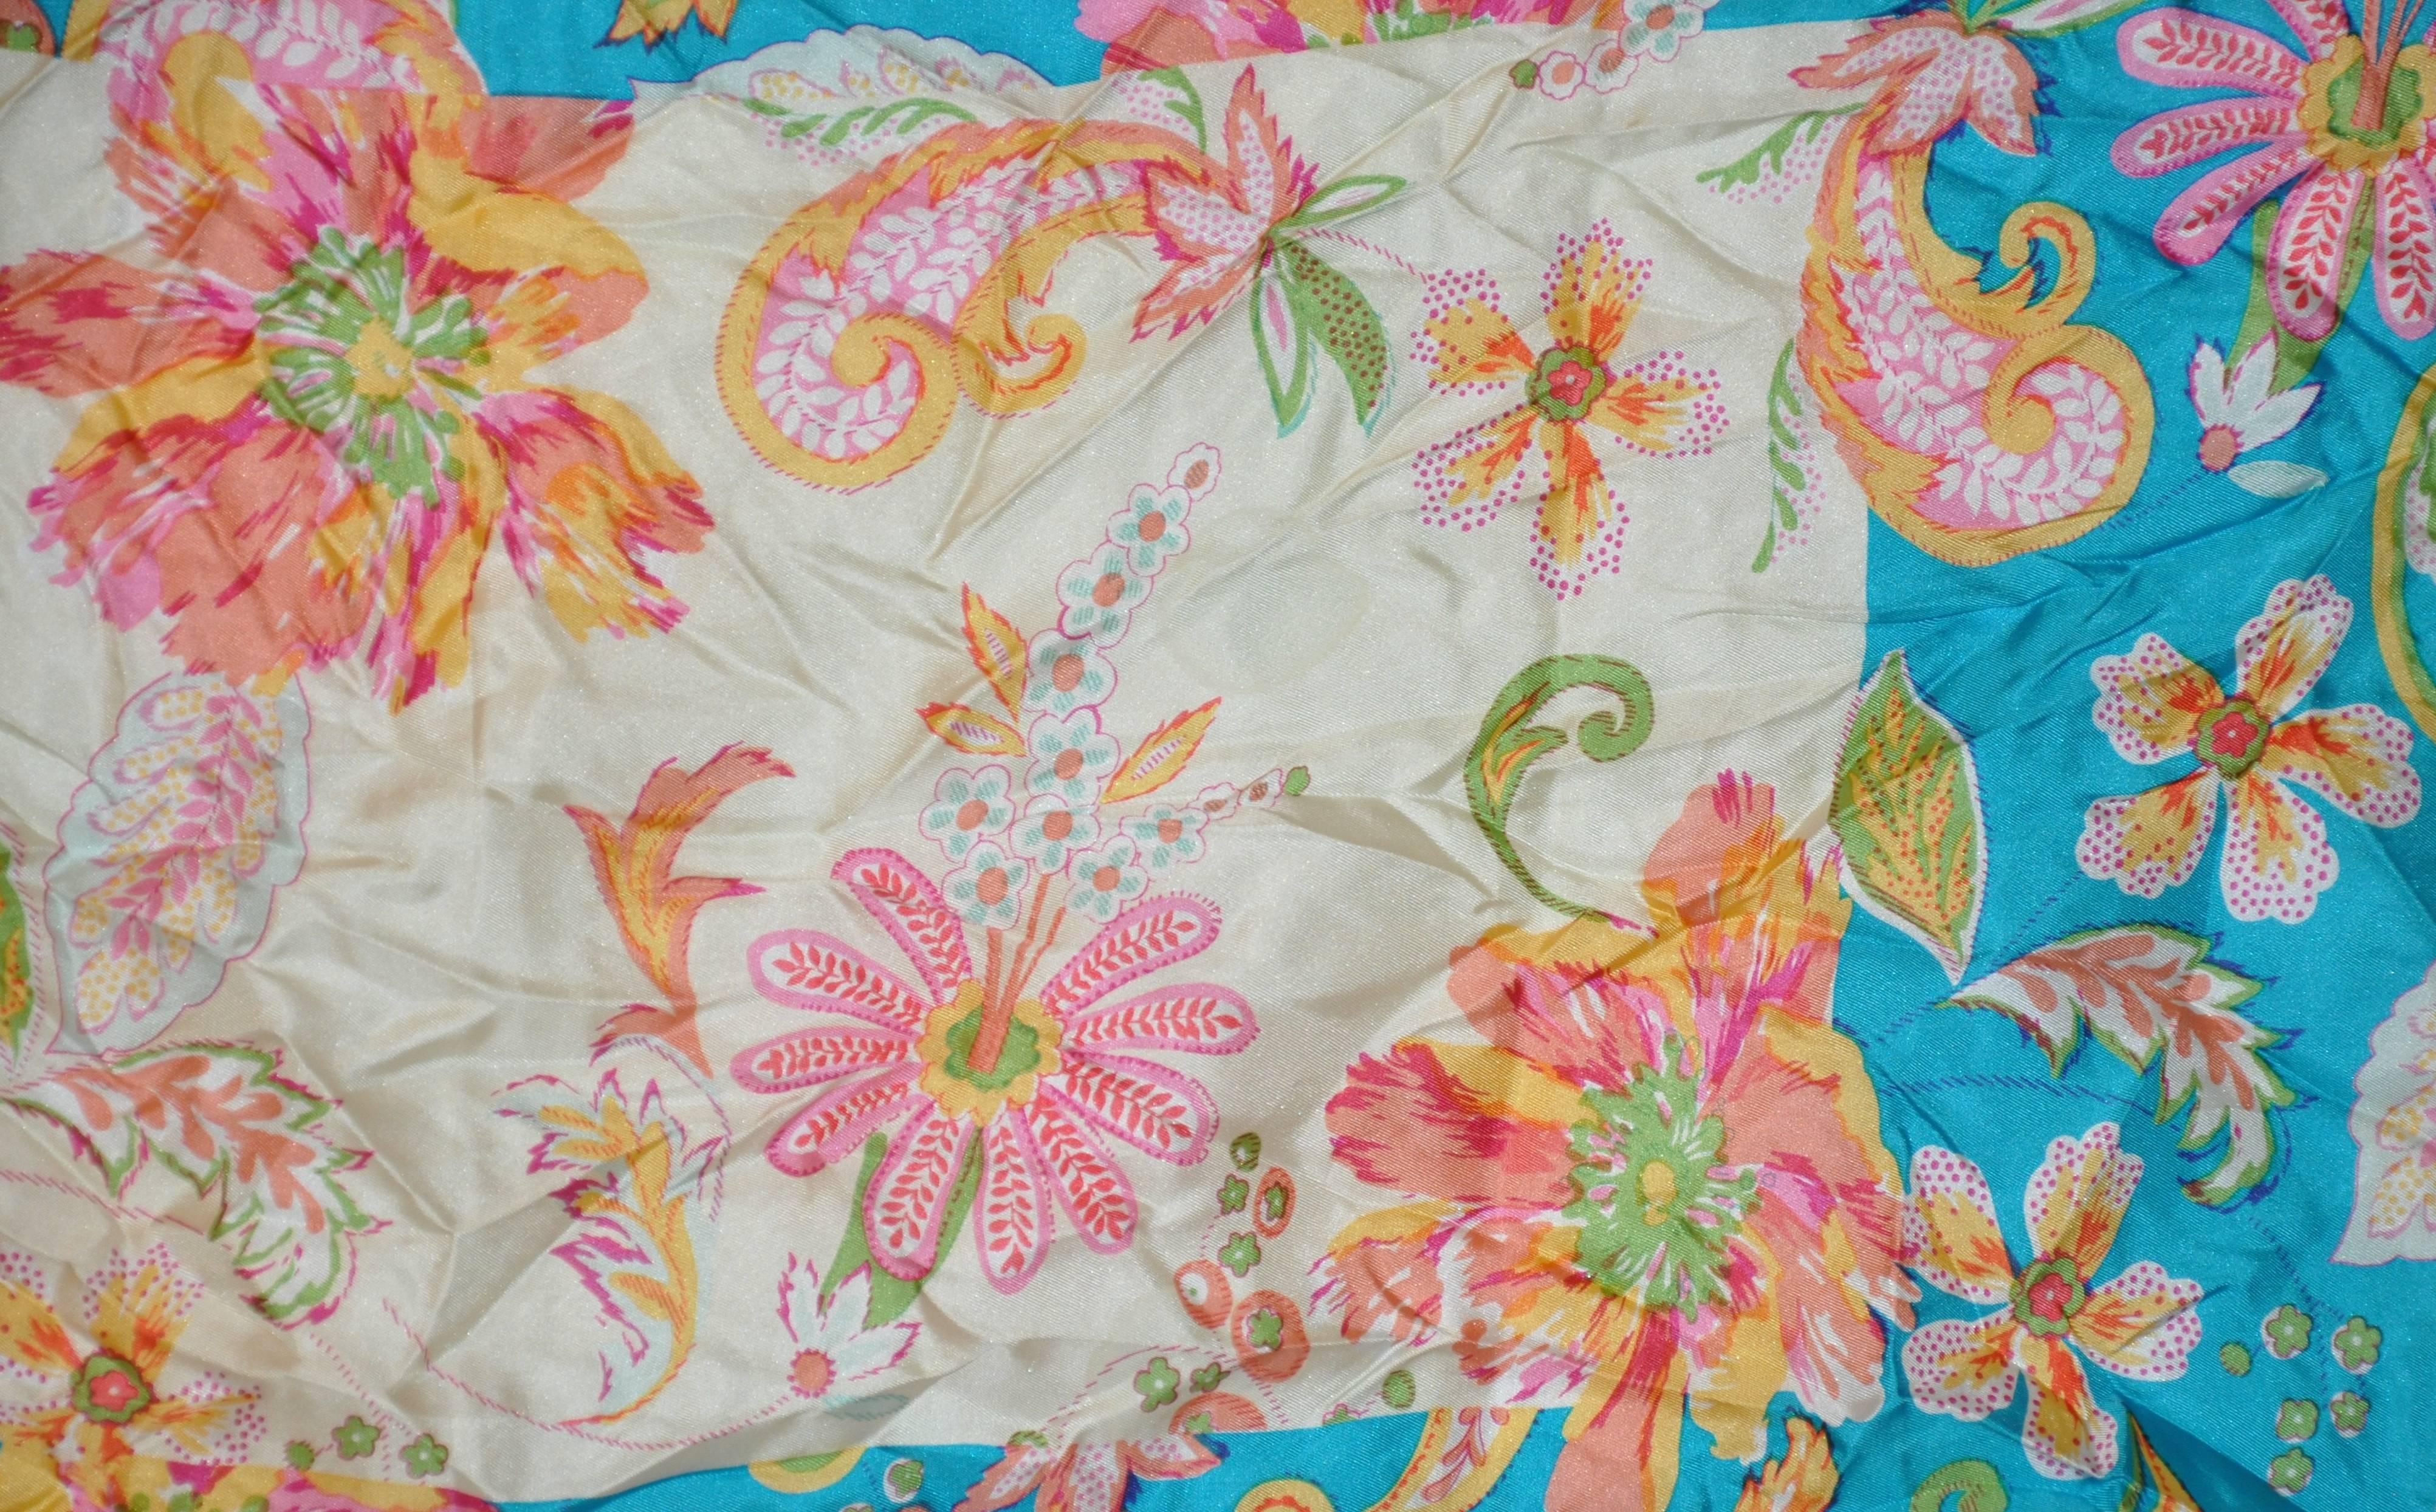         Oscar de la Renta wonderful bold and colorful floral silk scarf measures 11 1/2